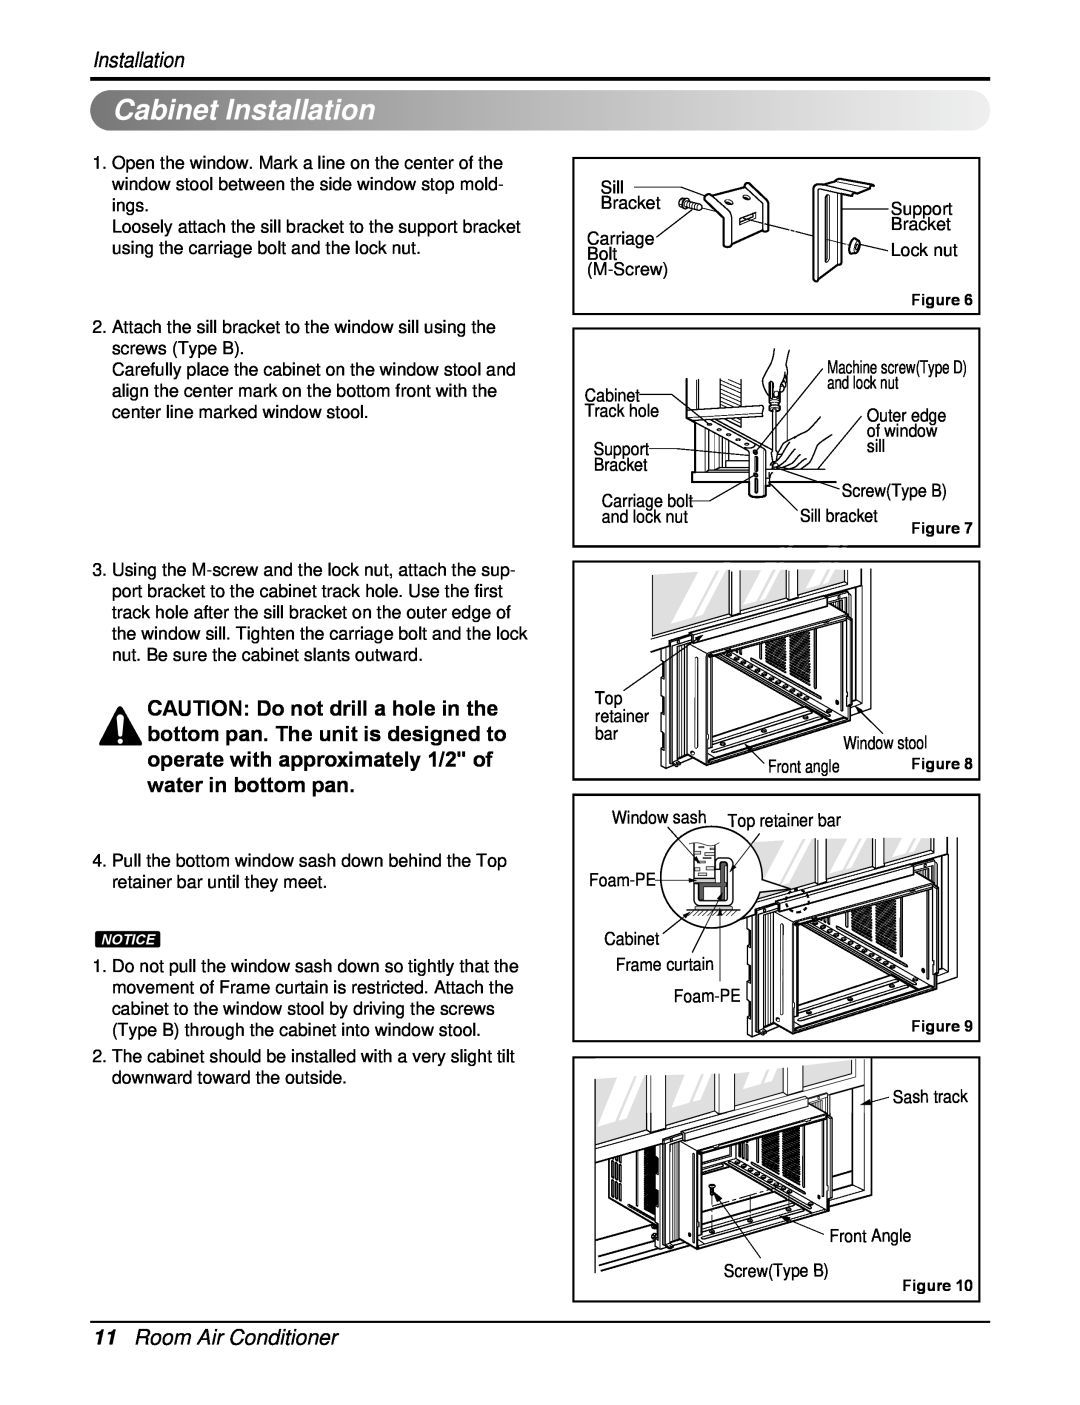 Heat Controller RAD-183A, RAD-243A service manual Cabinet Installation, 11Room Air Conditioner 